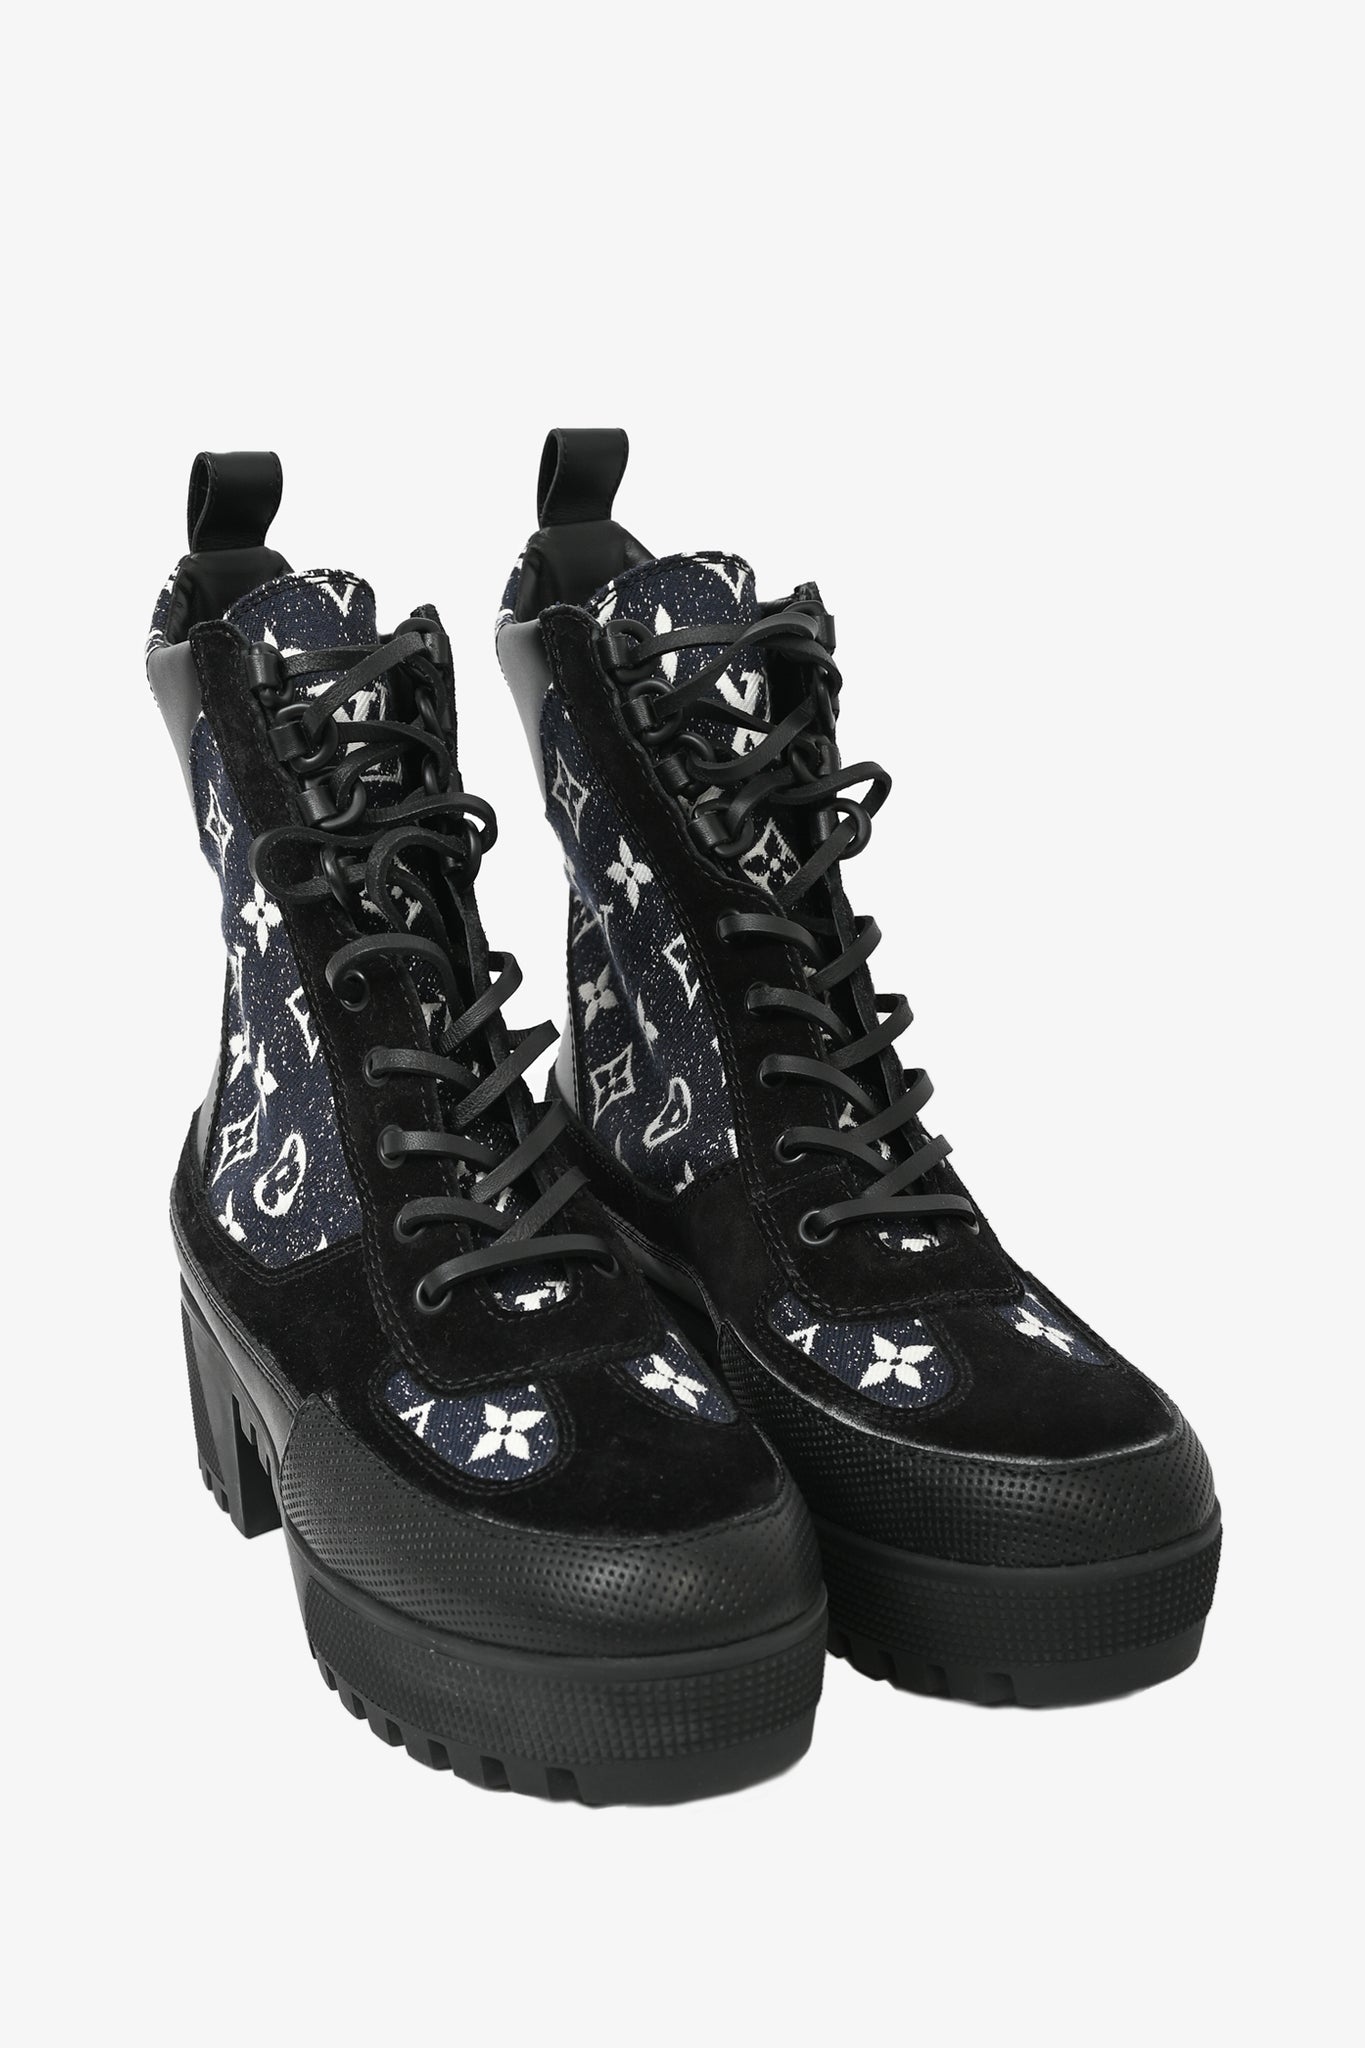 Louis Vuitton Black Leather Star Trail Block Heel Boots Size 38